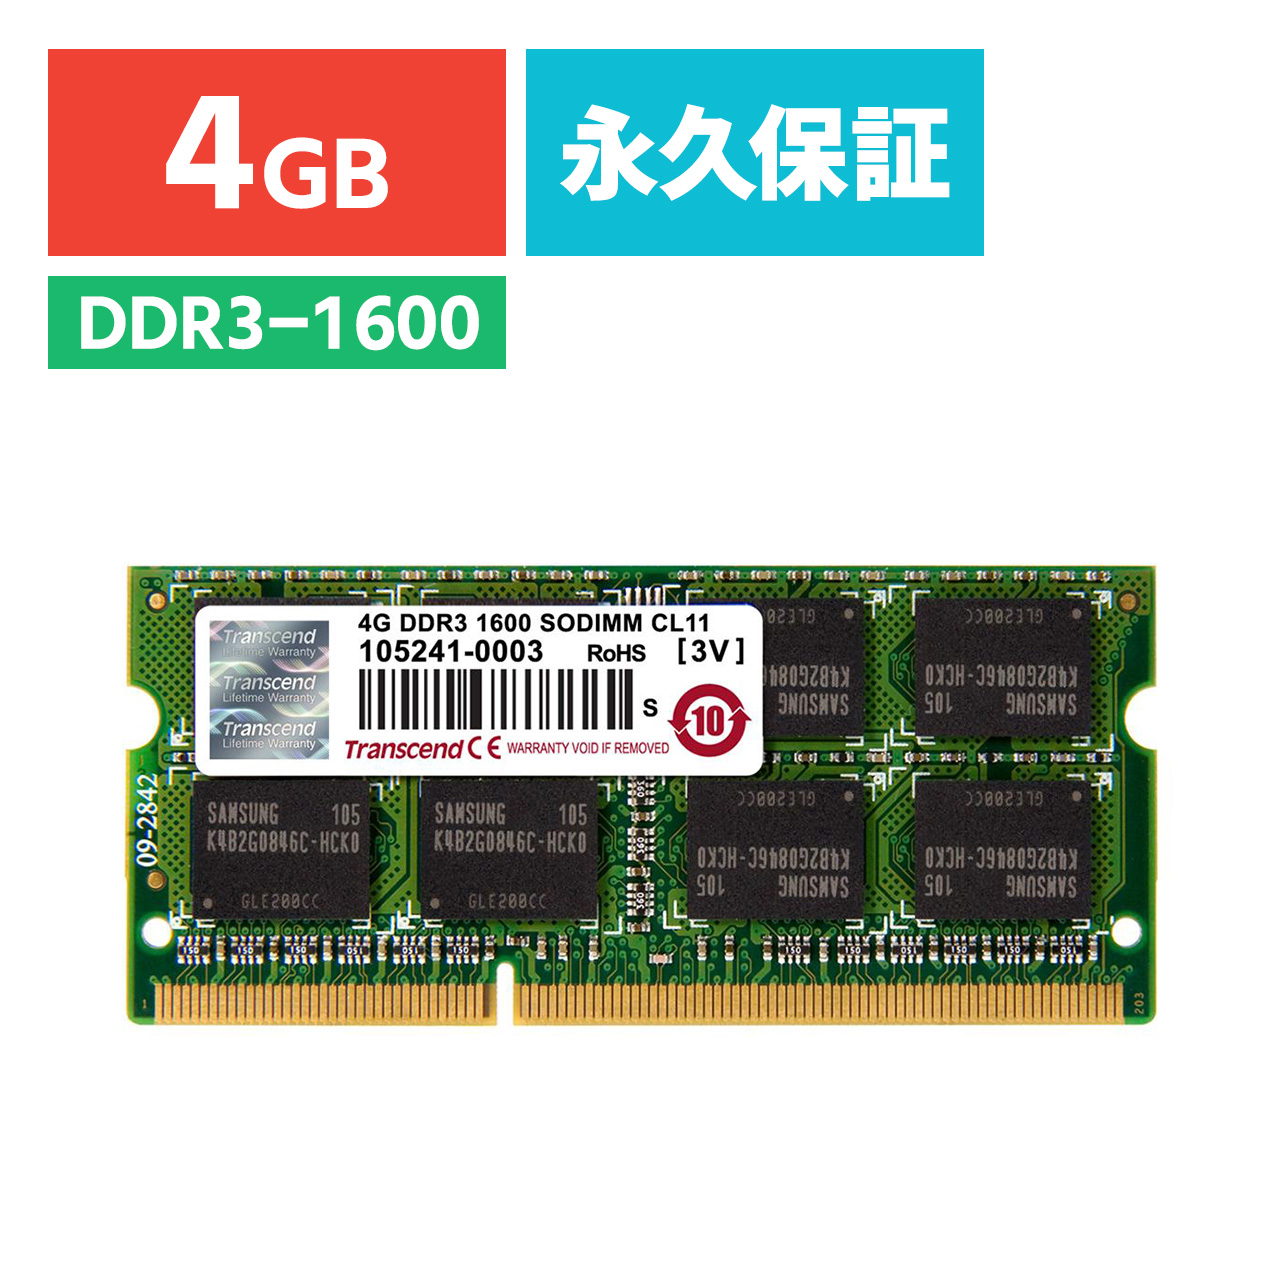 DIMM PC3-12800U (DDR3-1600) 4 GB x 4 枚